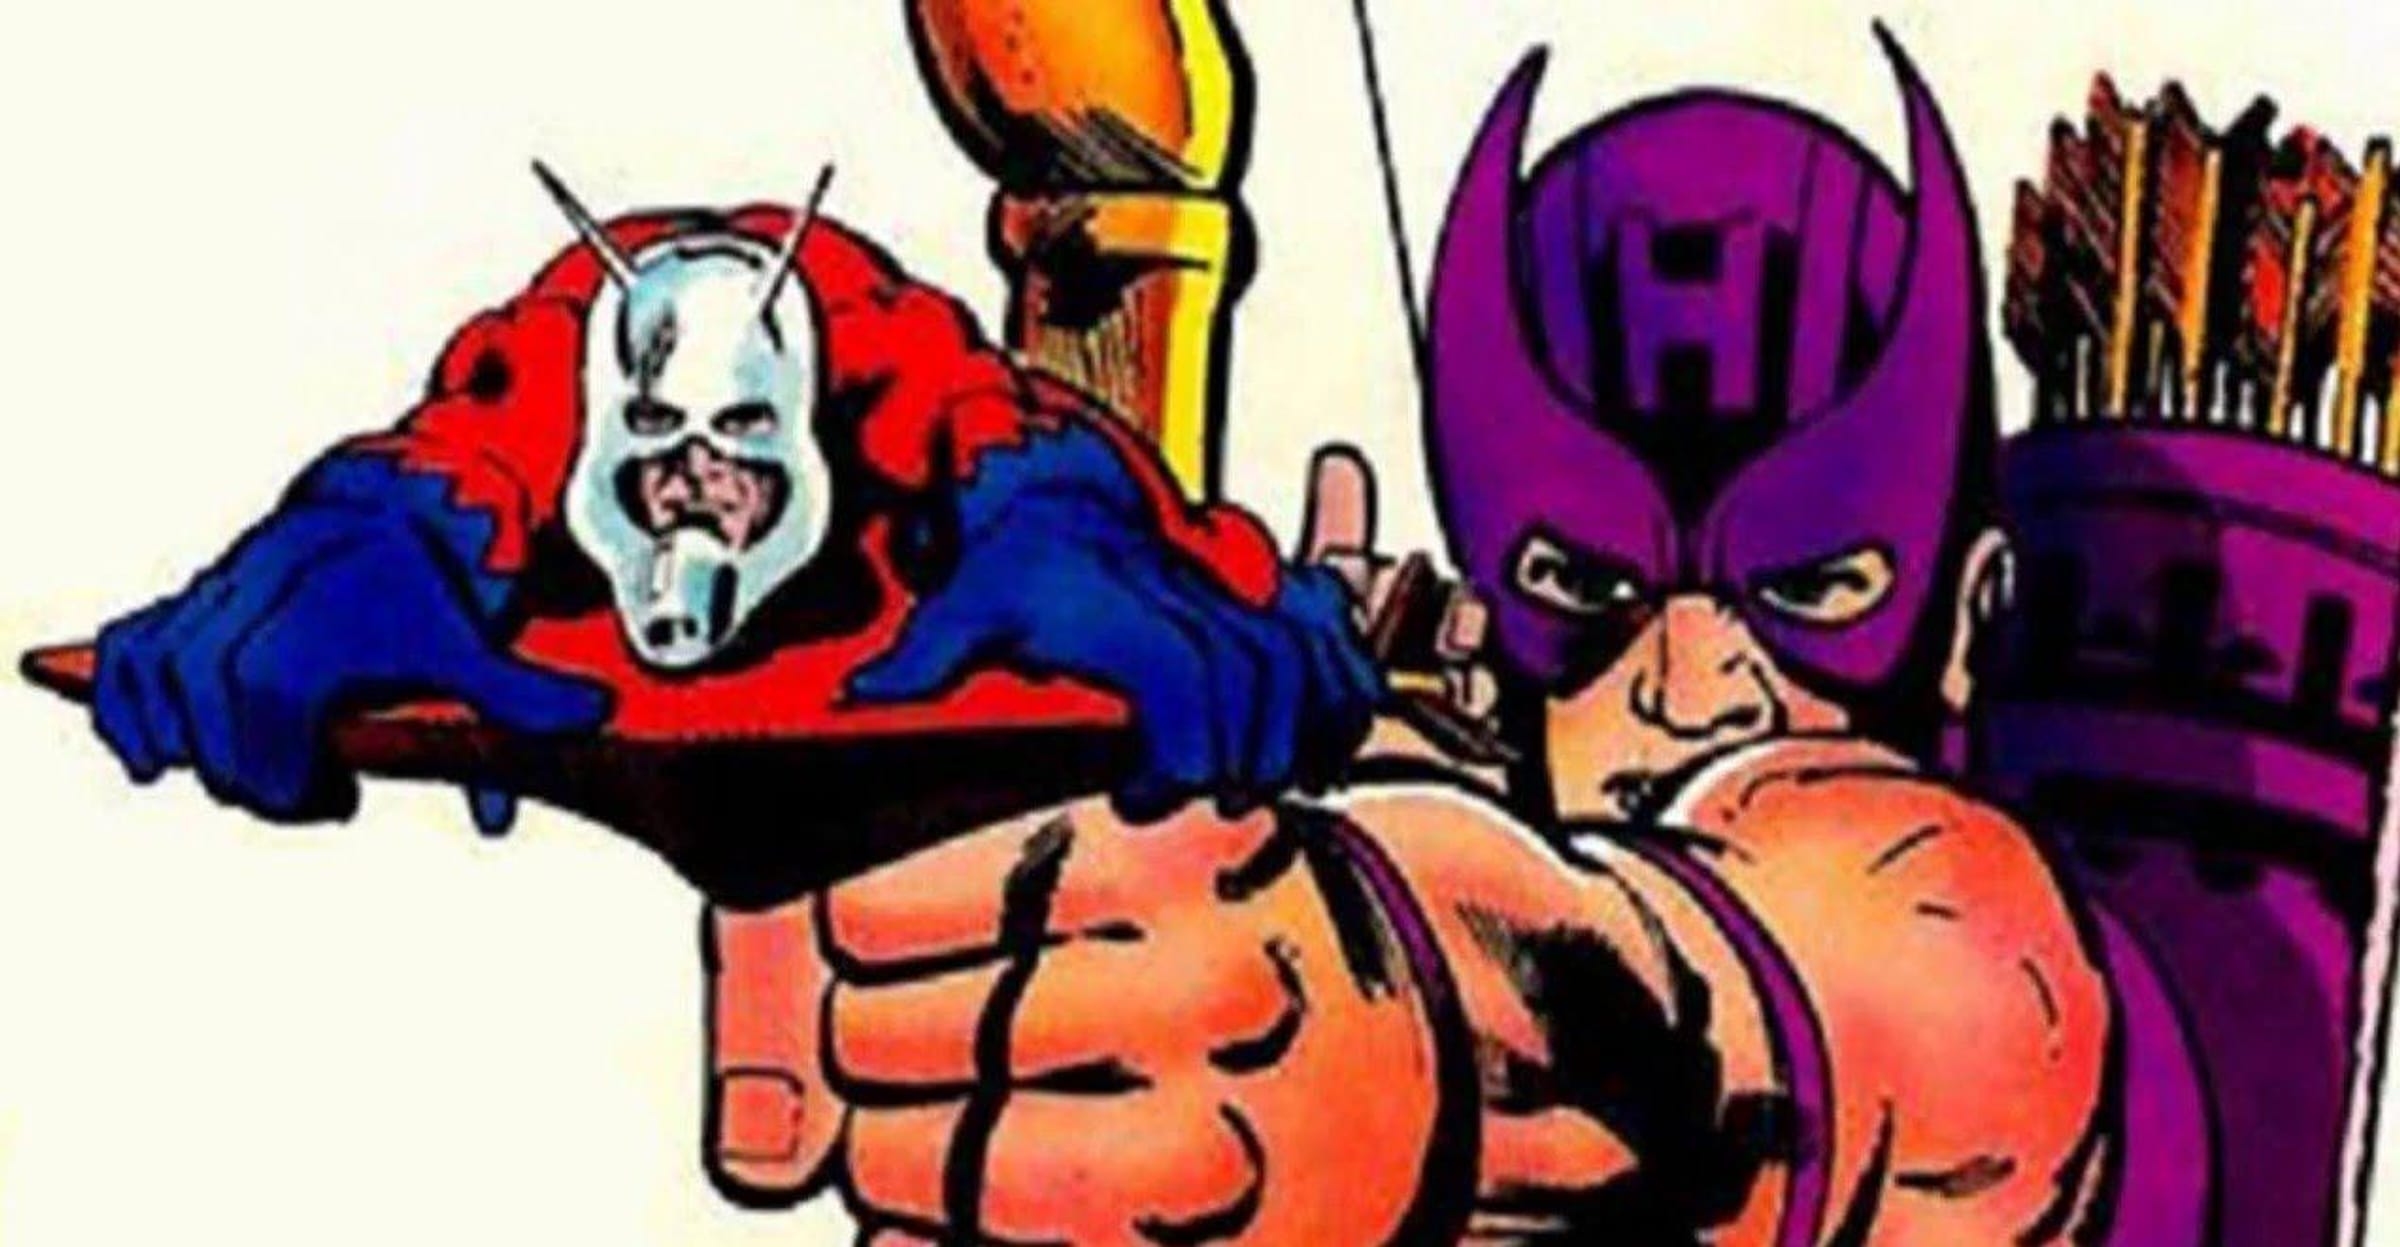 Marvel's Ant-Man And The Wasp Comics, Graphic Novels, & Manga